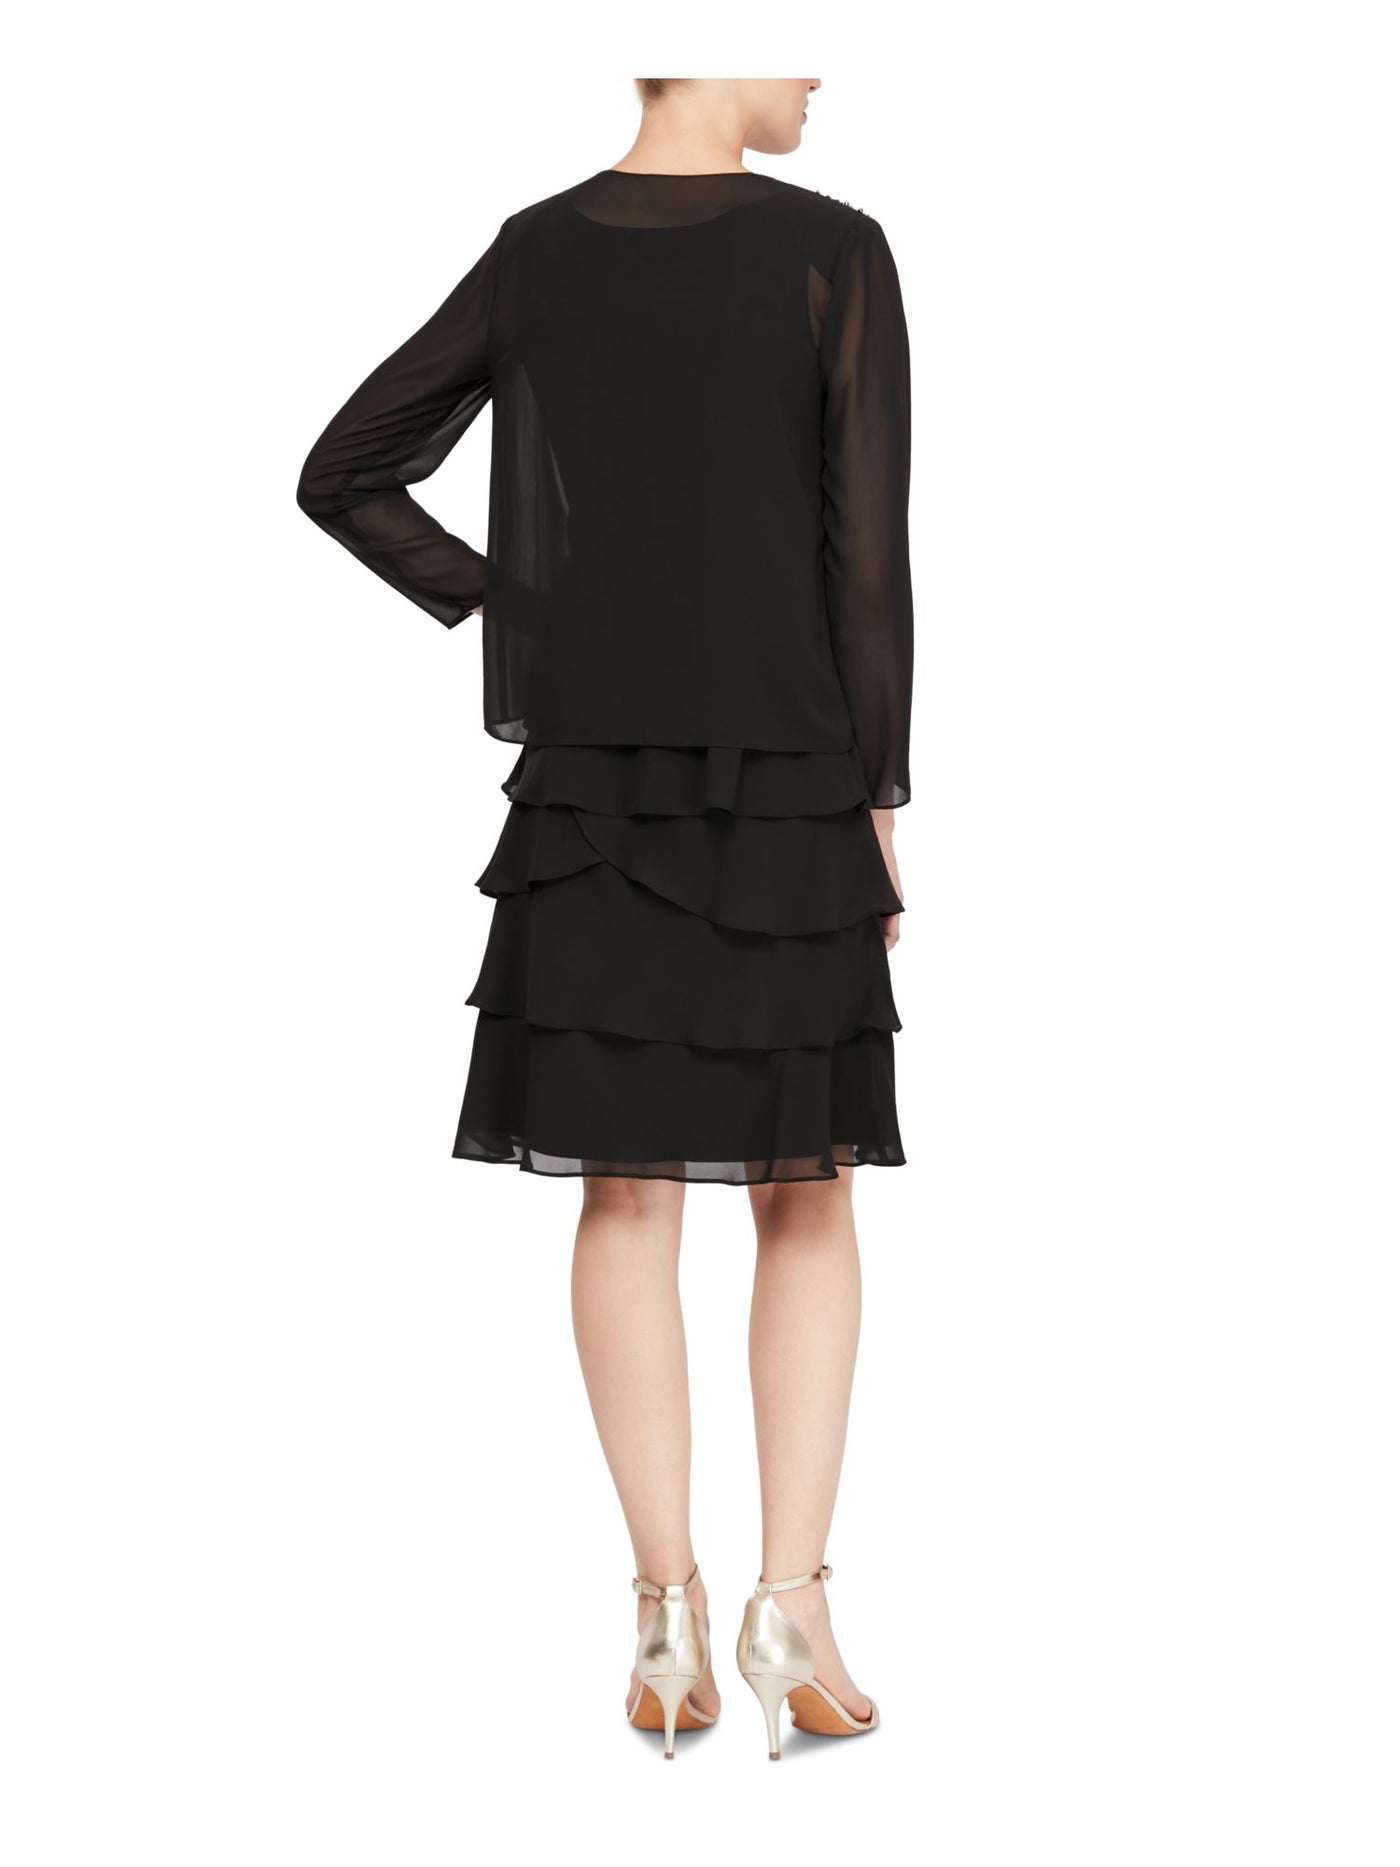 SLNY Womens Black Sheer Short Sleeve Open Cardigan Top Size: 12